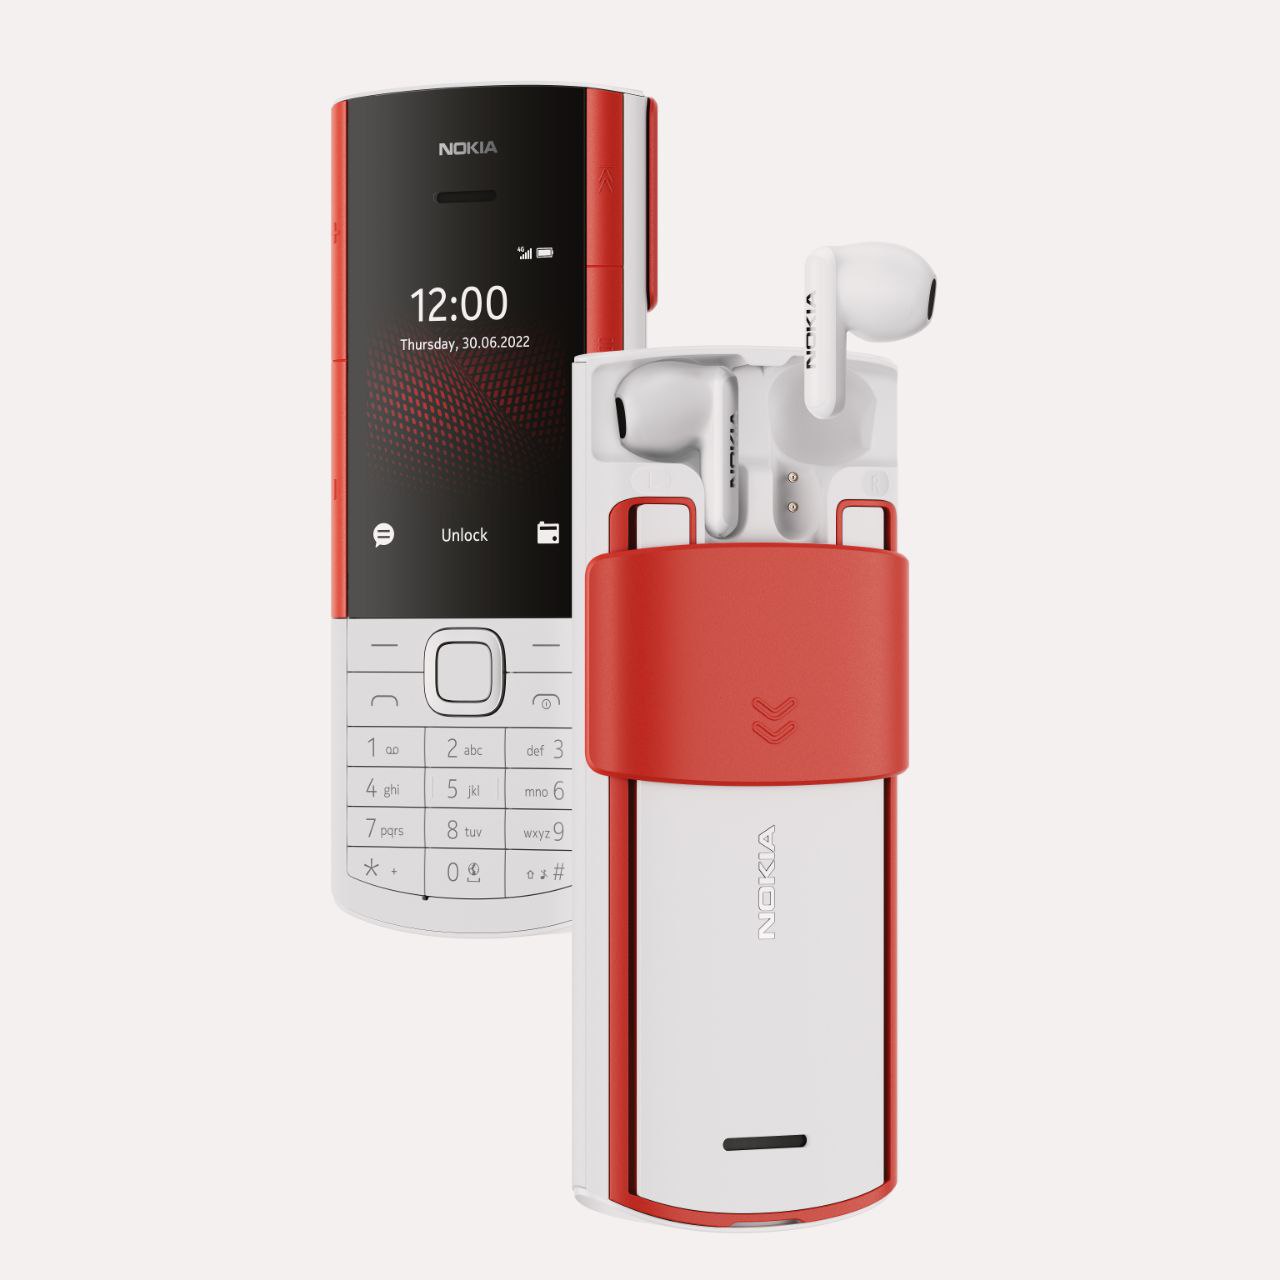 Nokia 5710 XpressAudio özellikleri